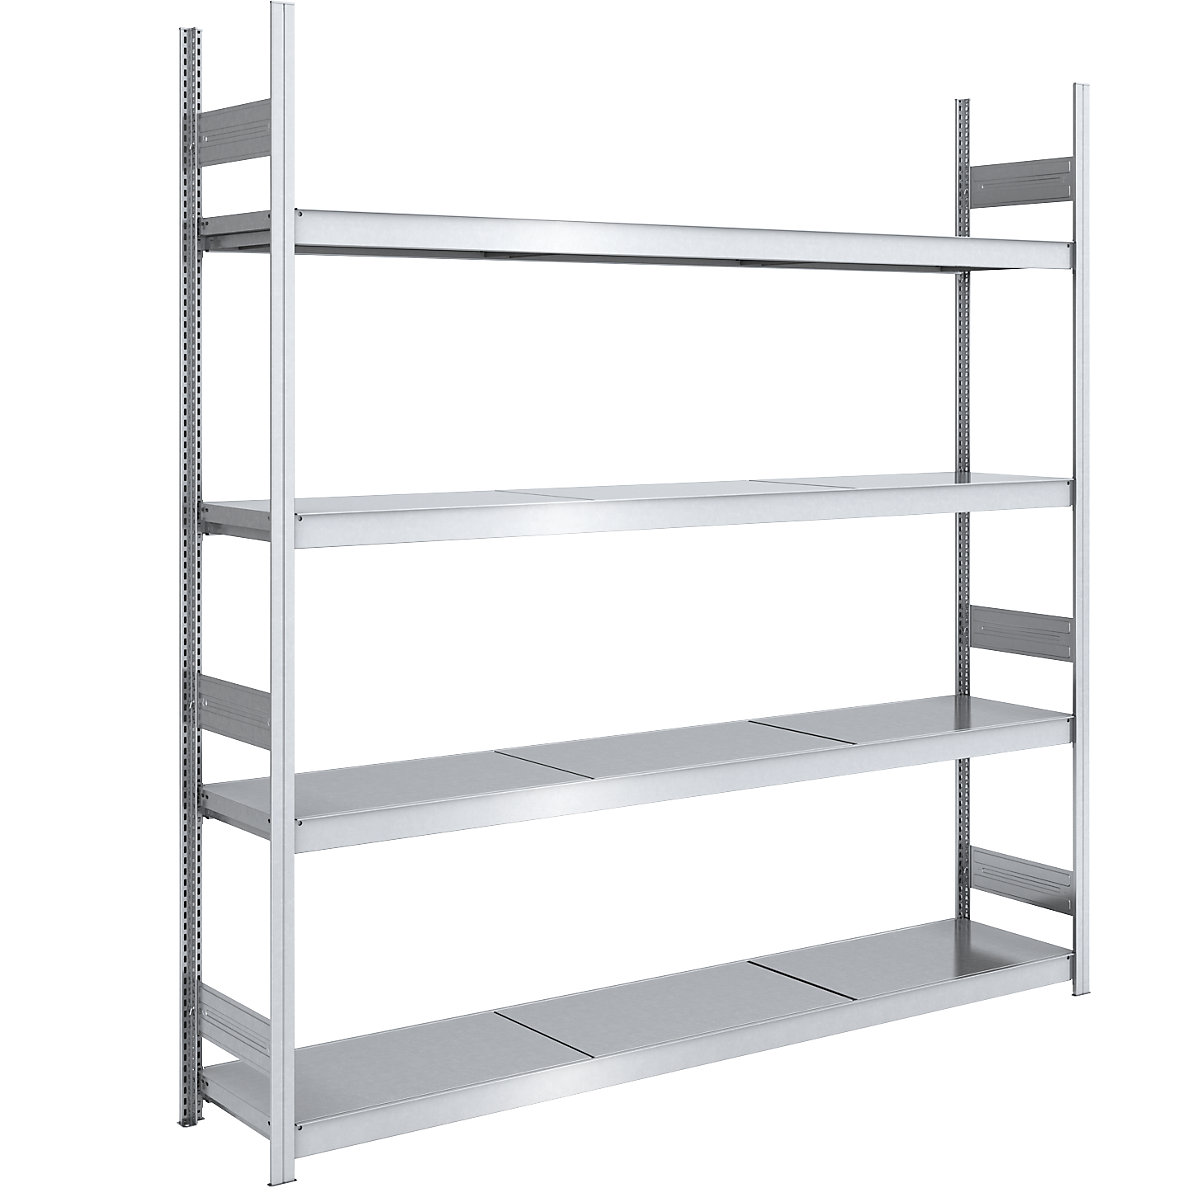 Wide span boltless shelving unit, zinc plated – hofe, shelf WxD 2250 x 500 mm, standard shelf unit, 4 steel shelves, height 2500 mm